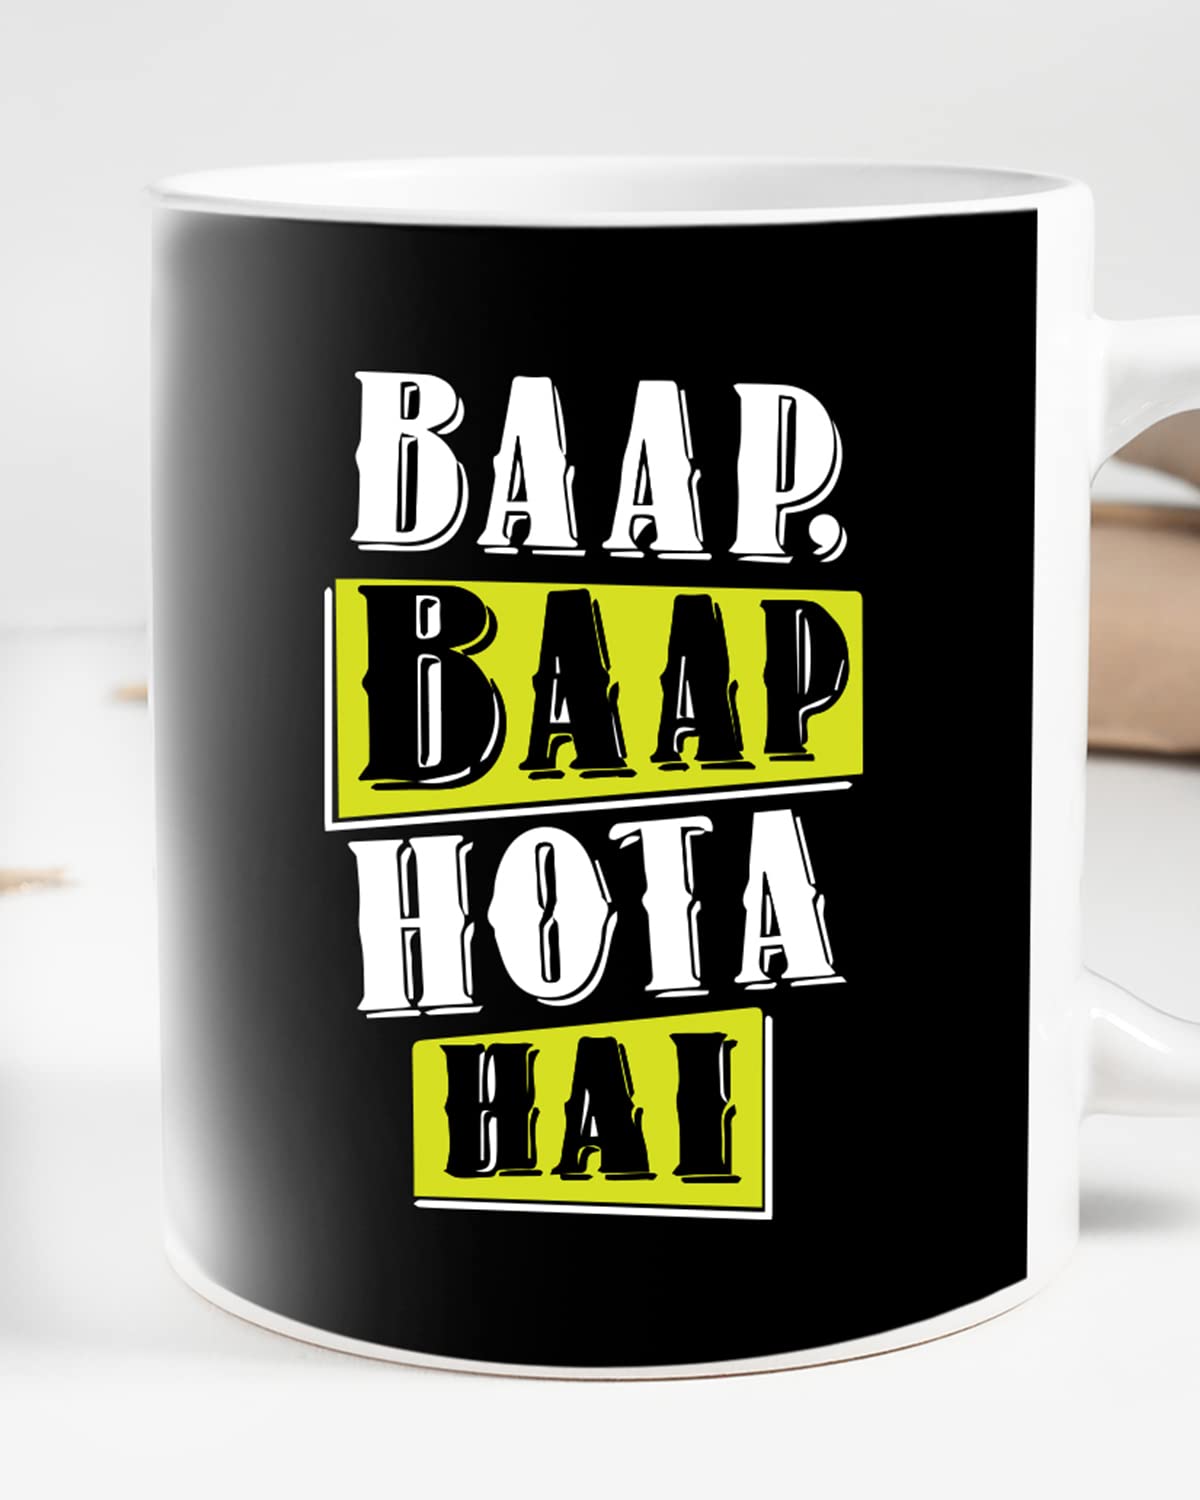 BAAP BAAP HOTA HAI Coffee Mug - Gift for Friend, Birthday Gift, Birthday Mug, Sarcasm Quotes Mug, Mugs with Funny & Funky Dialogues, Bollywood Mugs, Funny Mugs for Him & Her